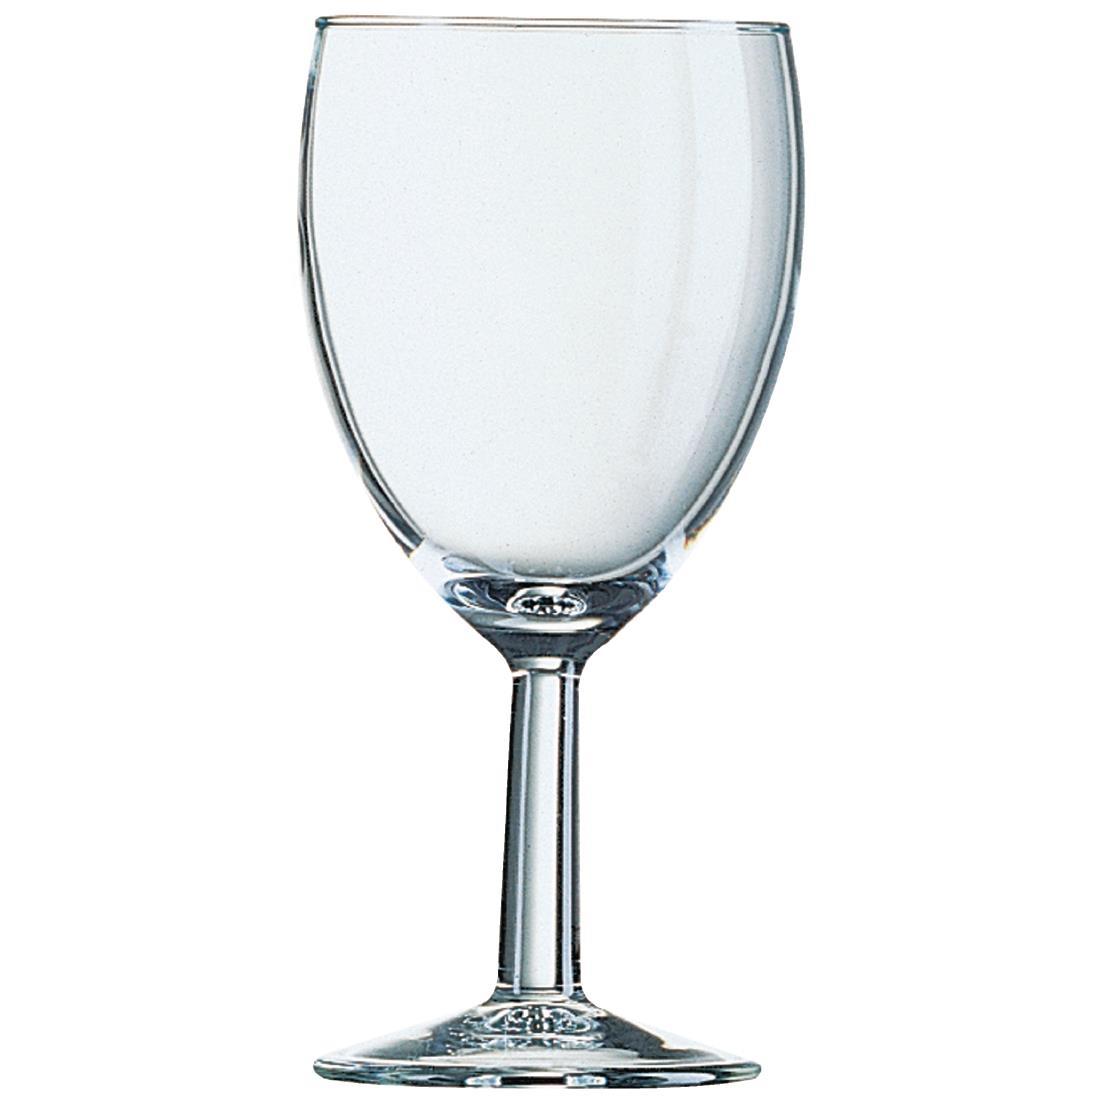 Arcoroc Savoie Wine Glasses 190ml CE Marked at 125ml (Pack of 48) - CJ502  - 1